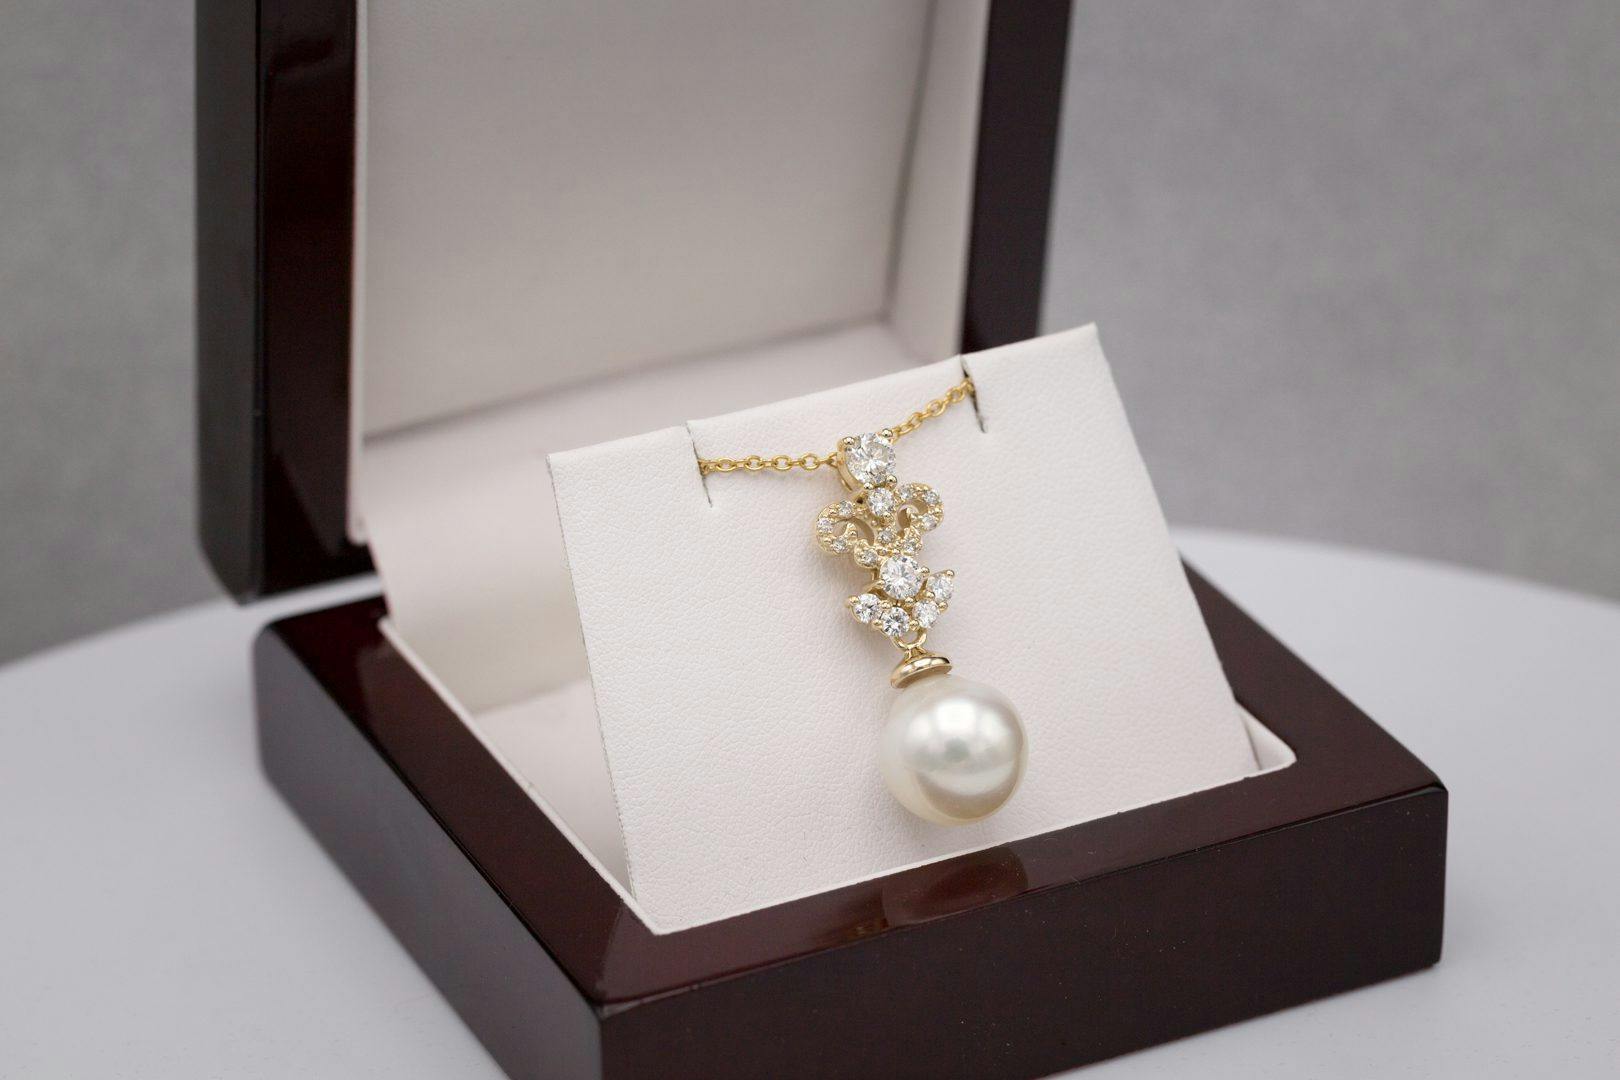 pearl pendant in jewelry box